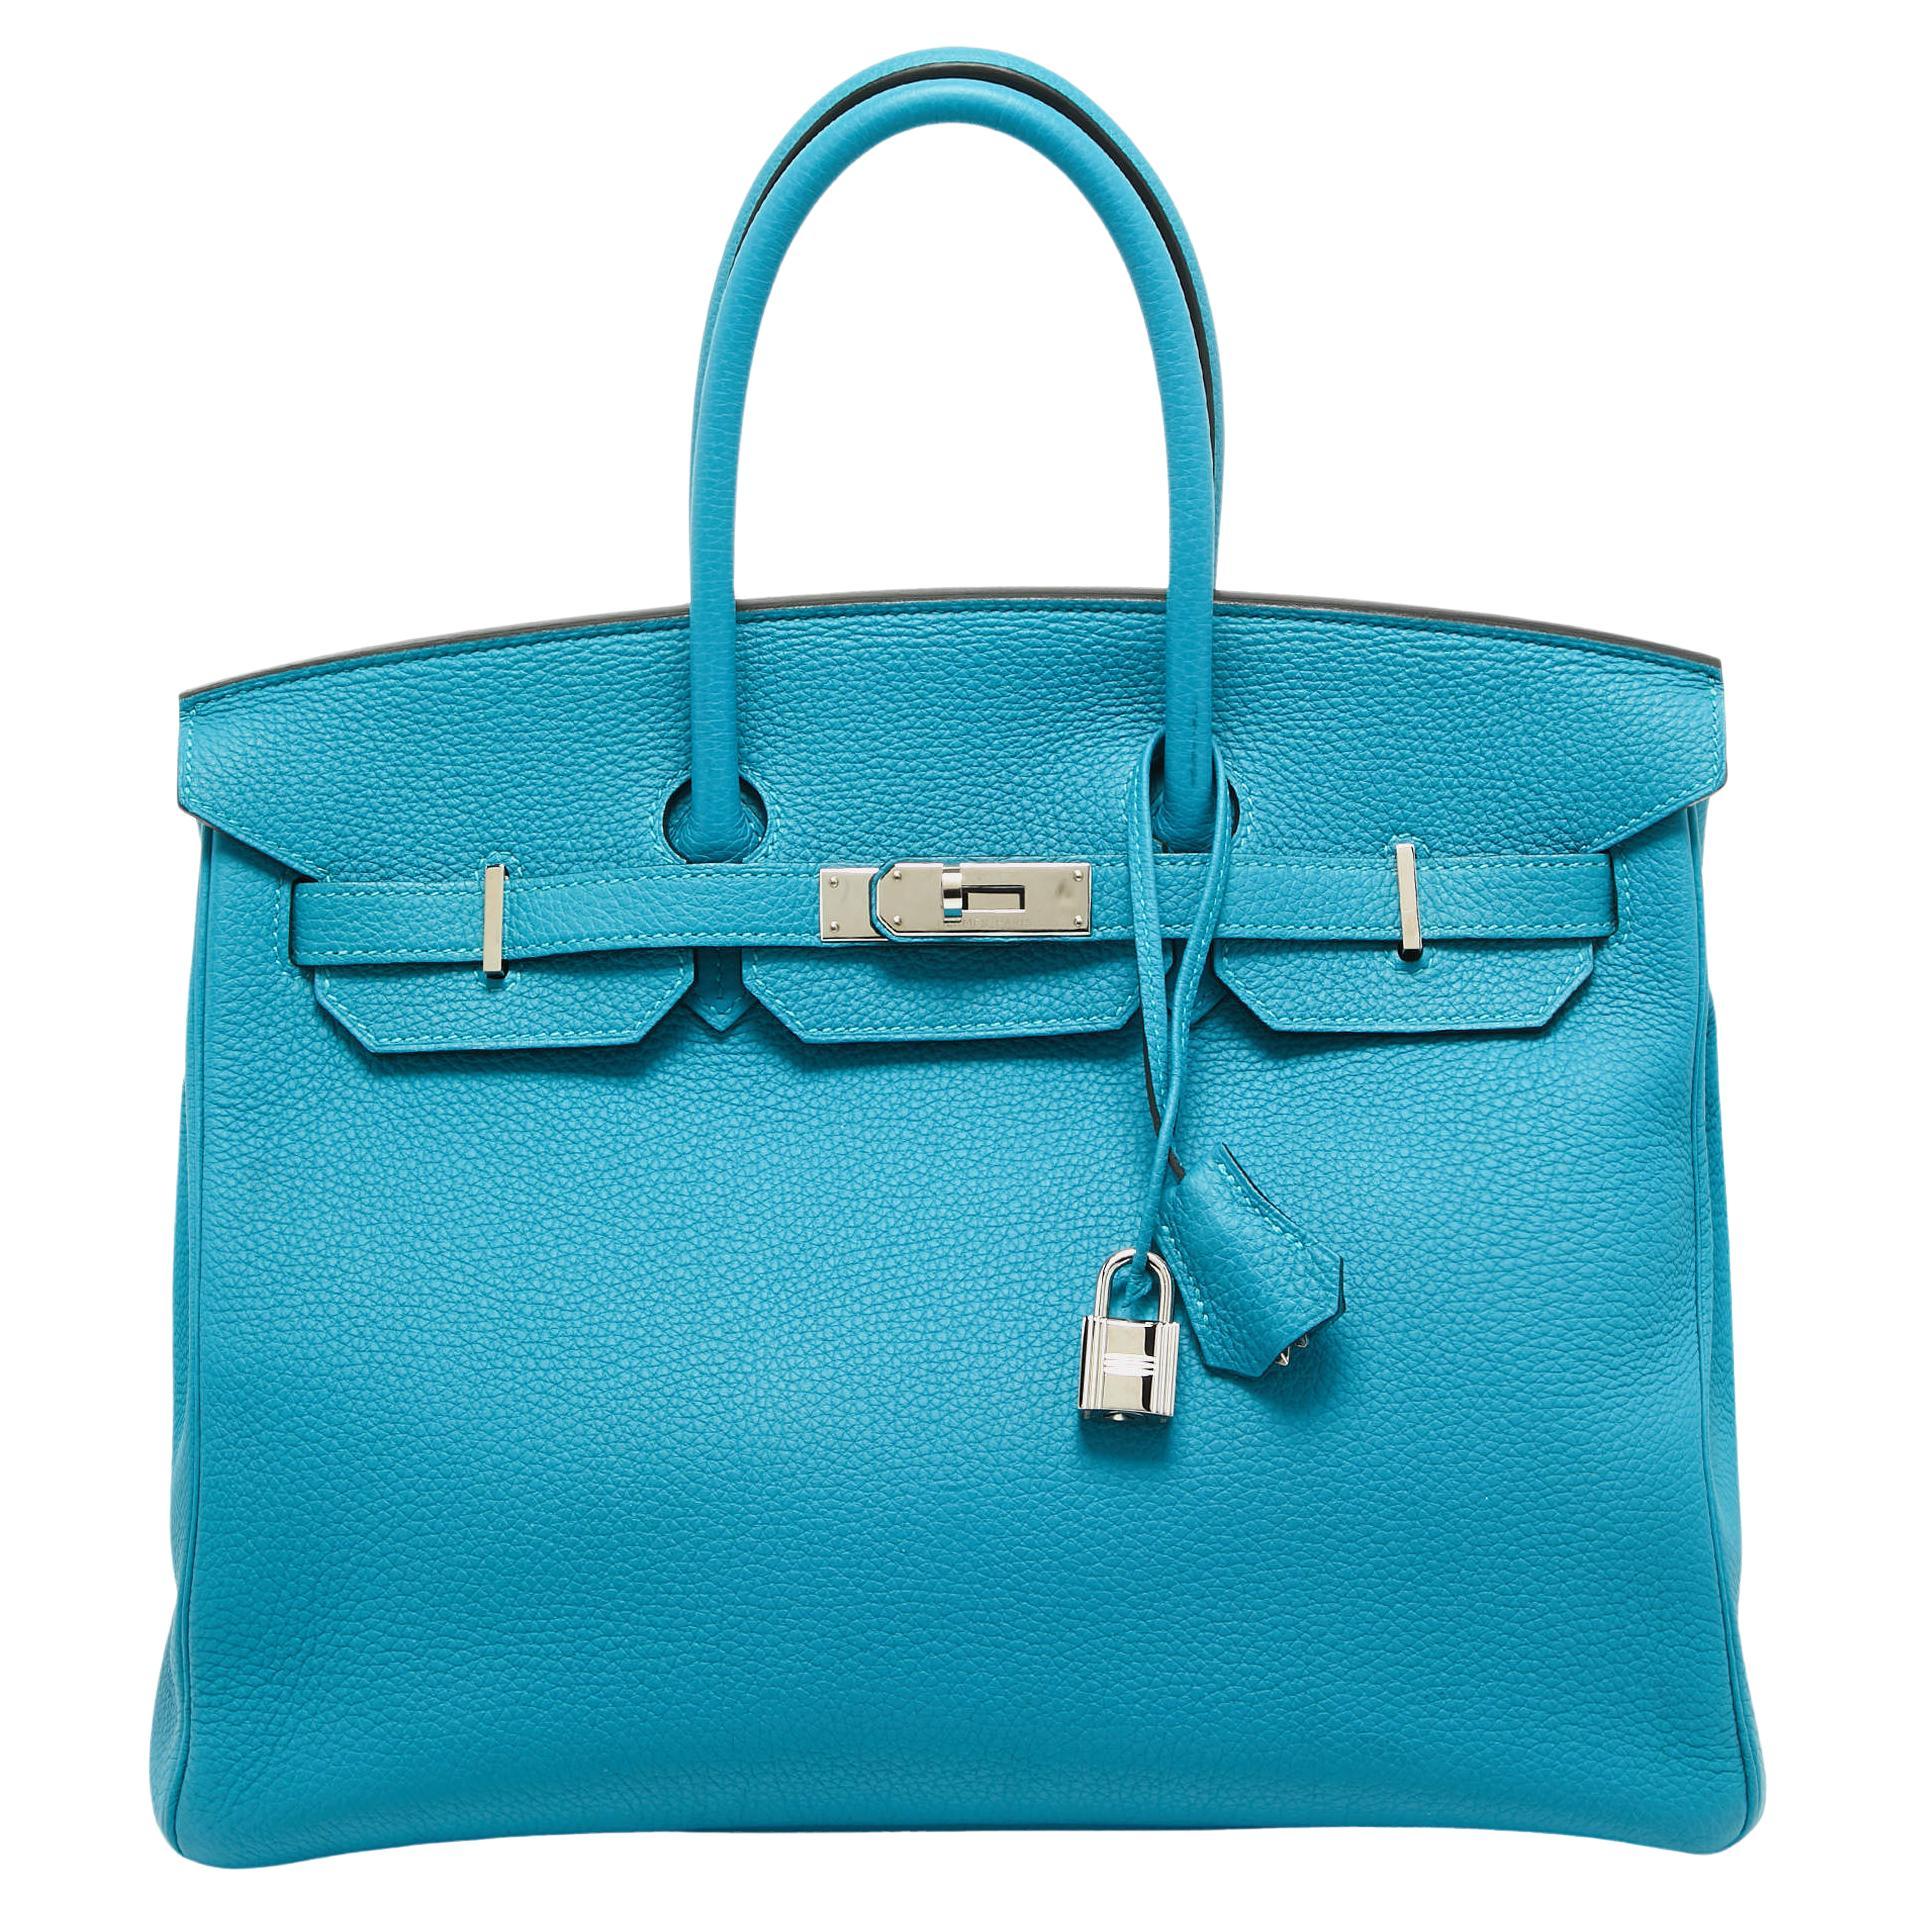 Hermes Turquoise Blue Togo Leather Palladium Finish Birkin 35 Bag For Sale